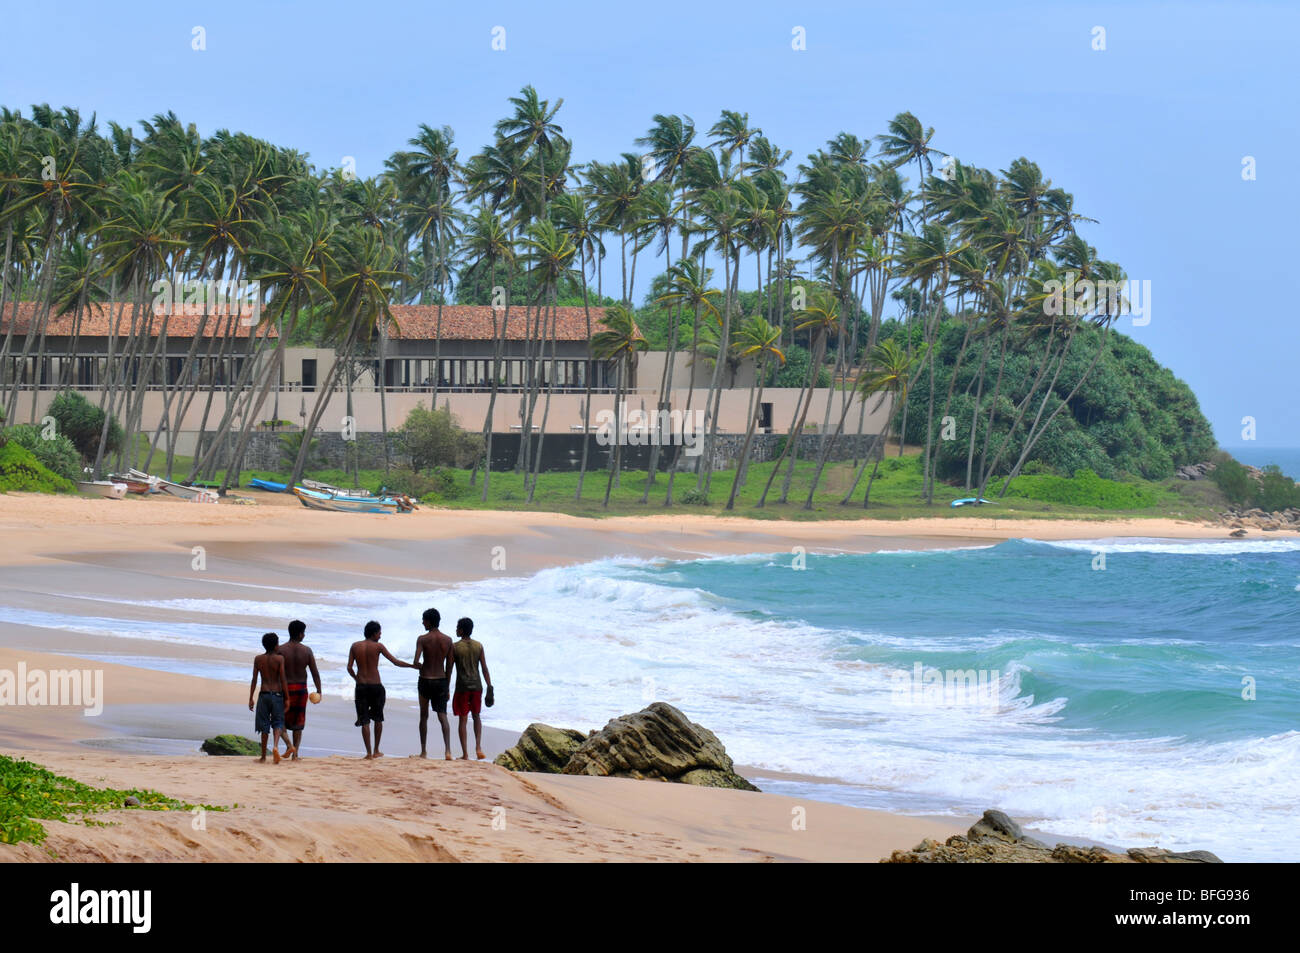 Amanwella Hotel and beach, Tongalle, Sri Lanka Stock Photo